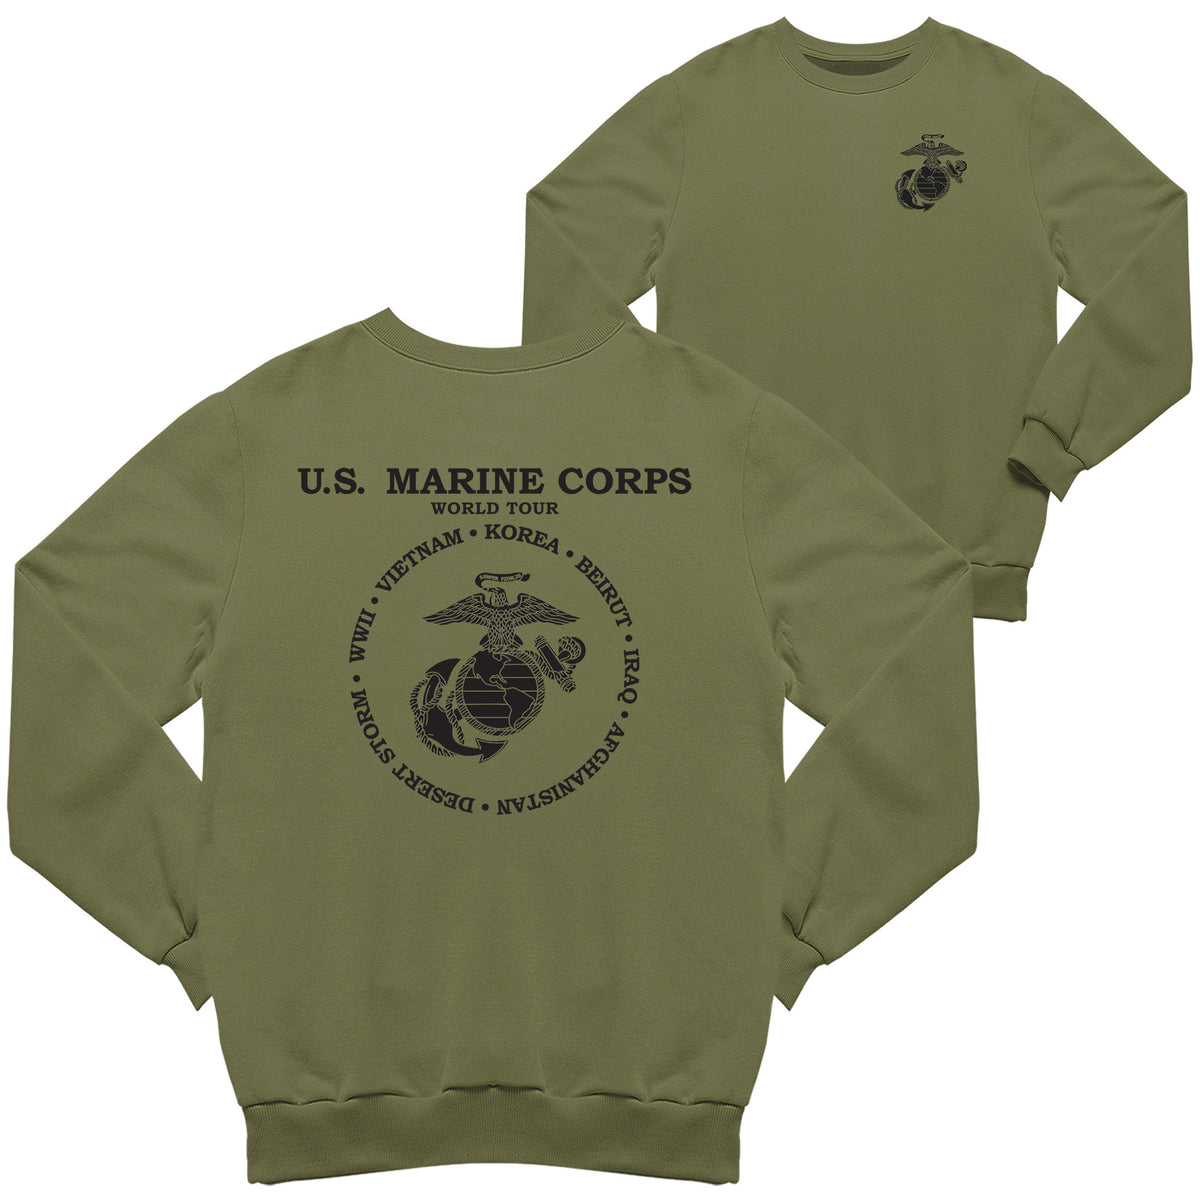 U.S. Marine Corps World Tour 2-Sided Sweatshirt